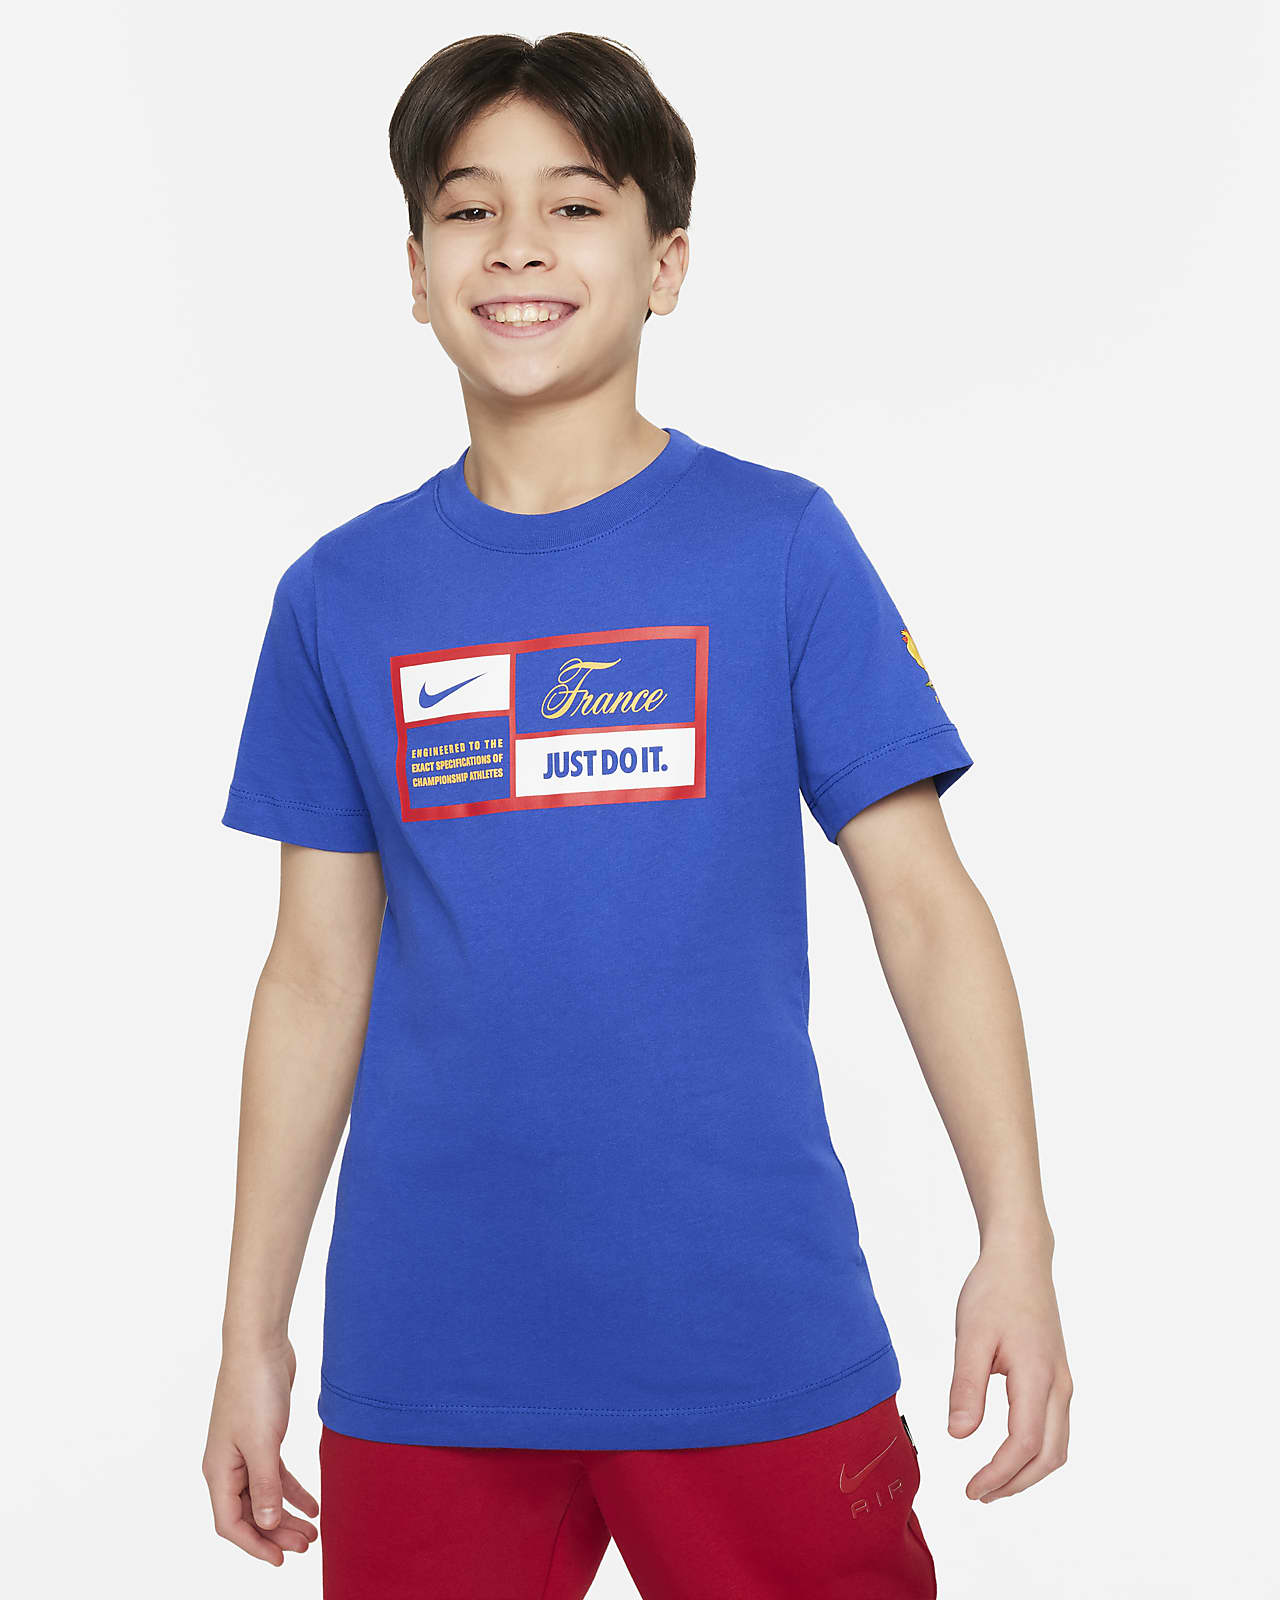 FFF Older Kids' Nike Football T-Shirt